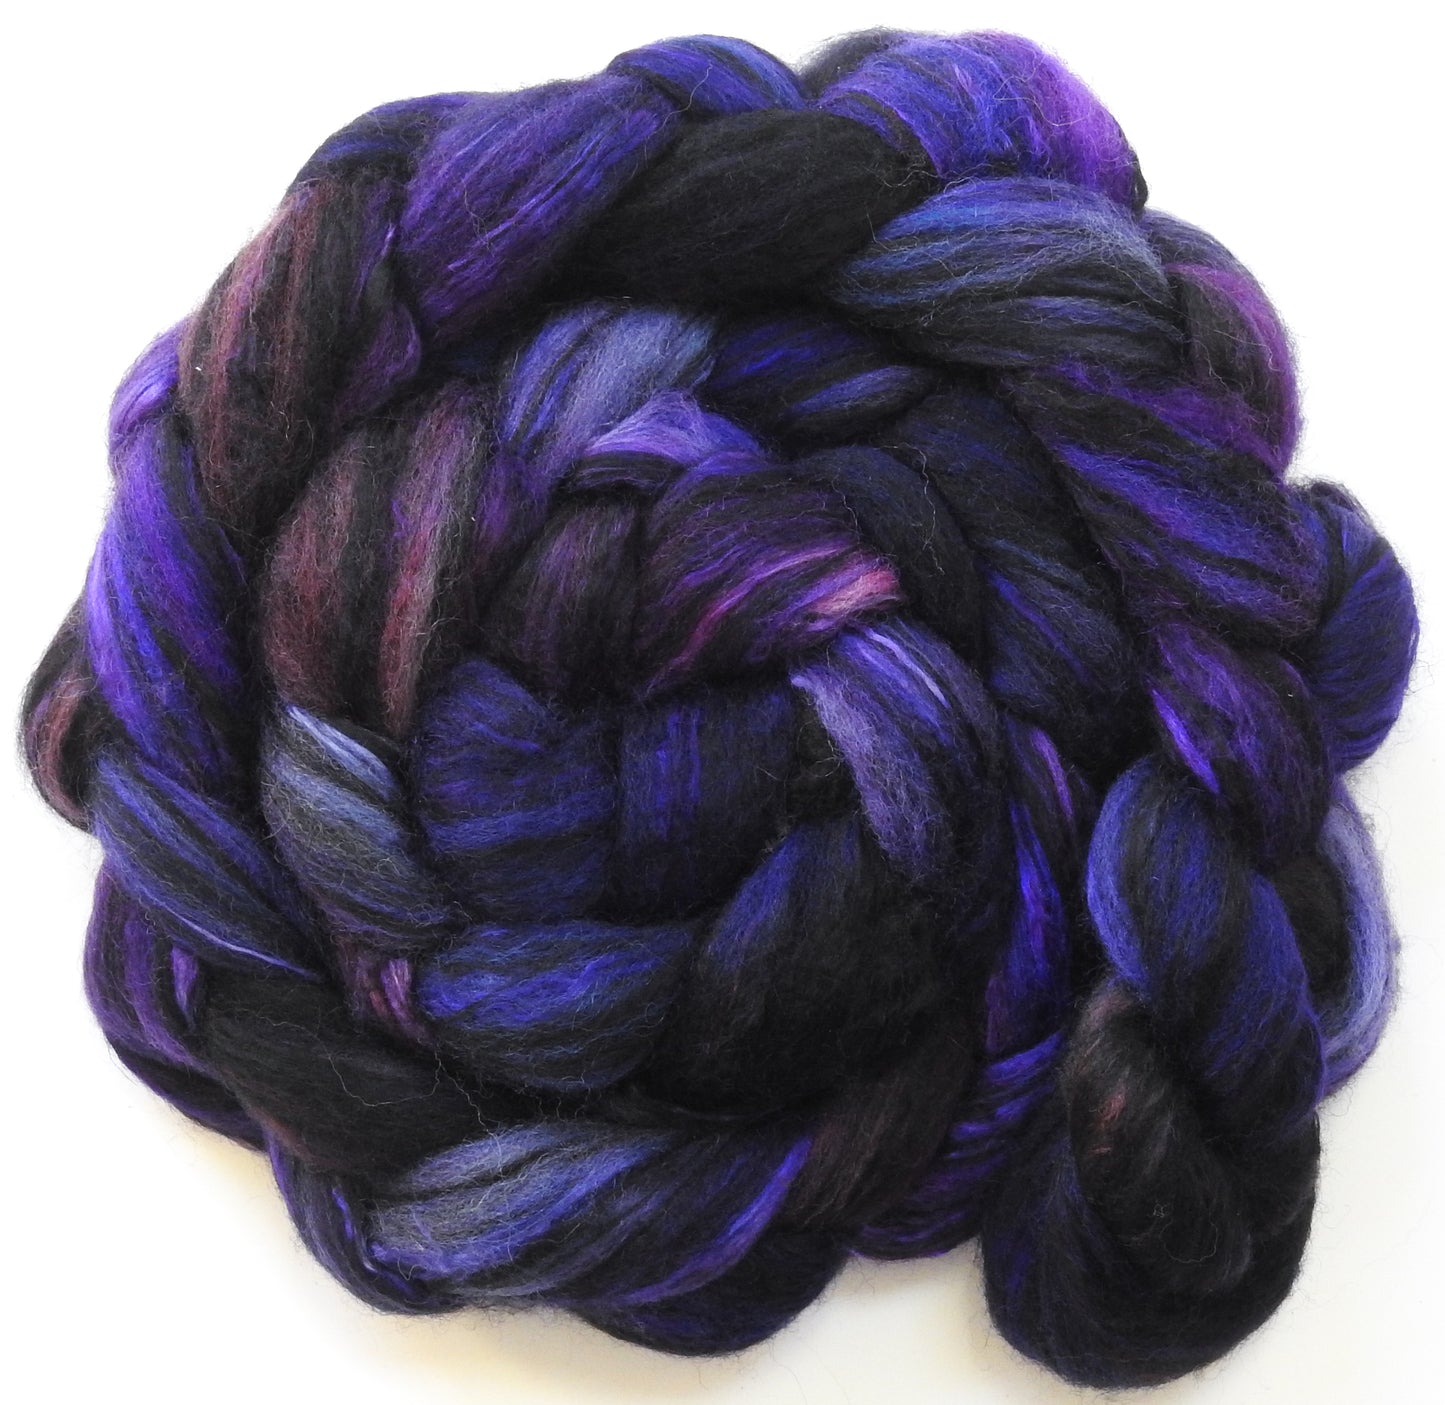 Purple People Eater (5.3 oz) - Batt in a Braid #55- Shetland/ Mulberry Silk/ Black Bamboo (50/25/25)